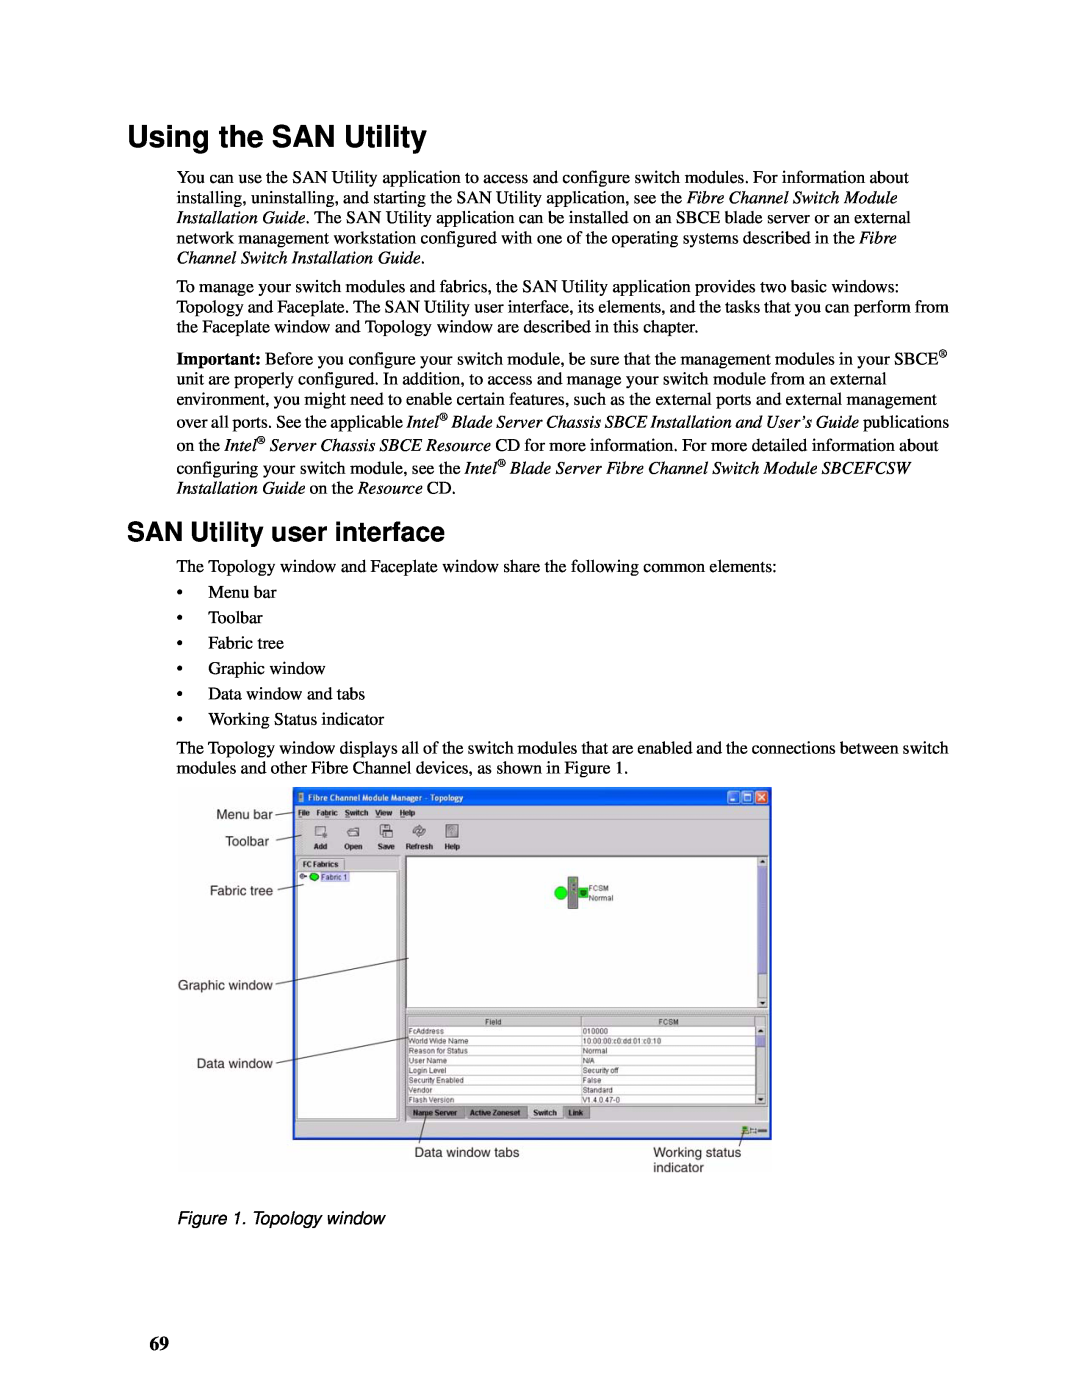 Intel SBCEFCSW, SBFCM manual Using the SAN Utility, SAN Utility user interface, Topology window 